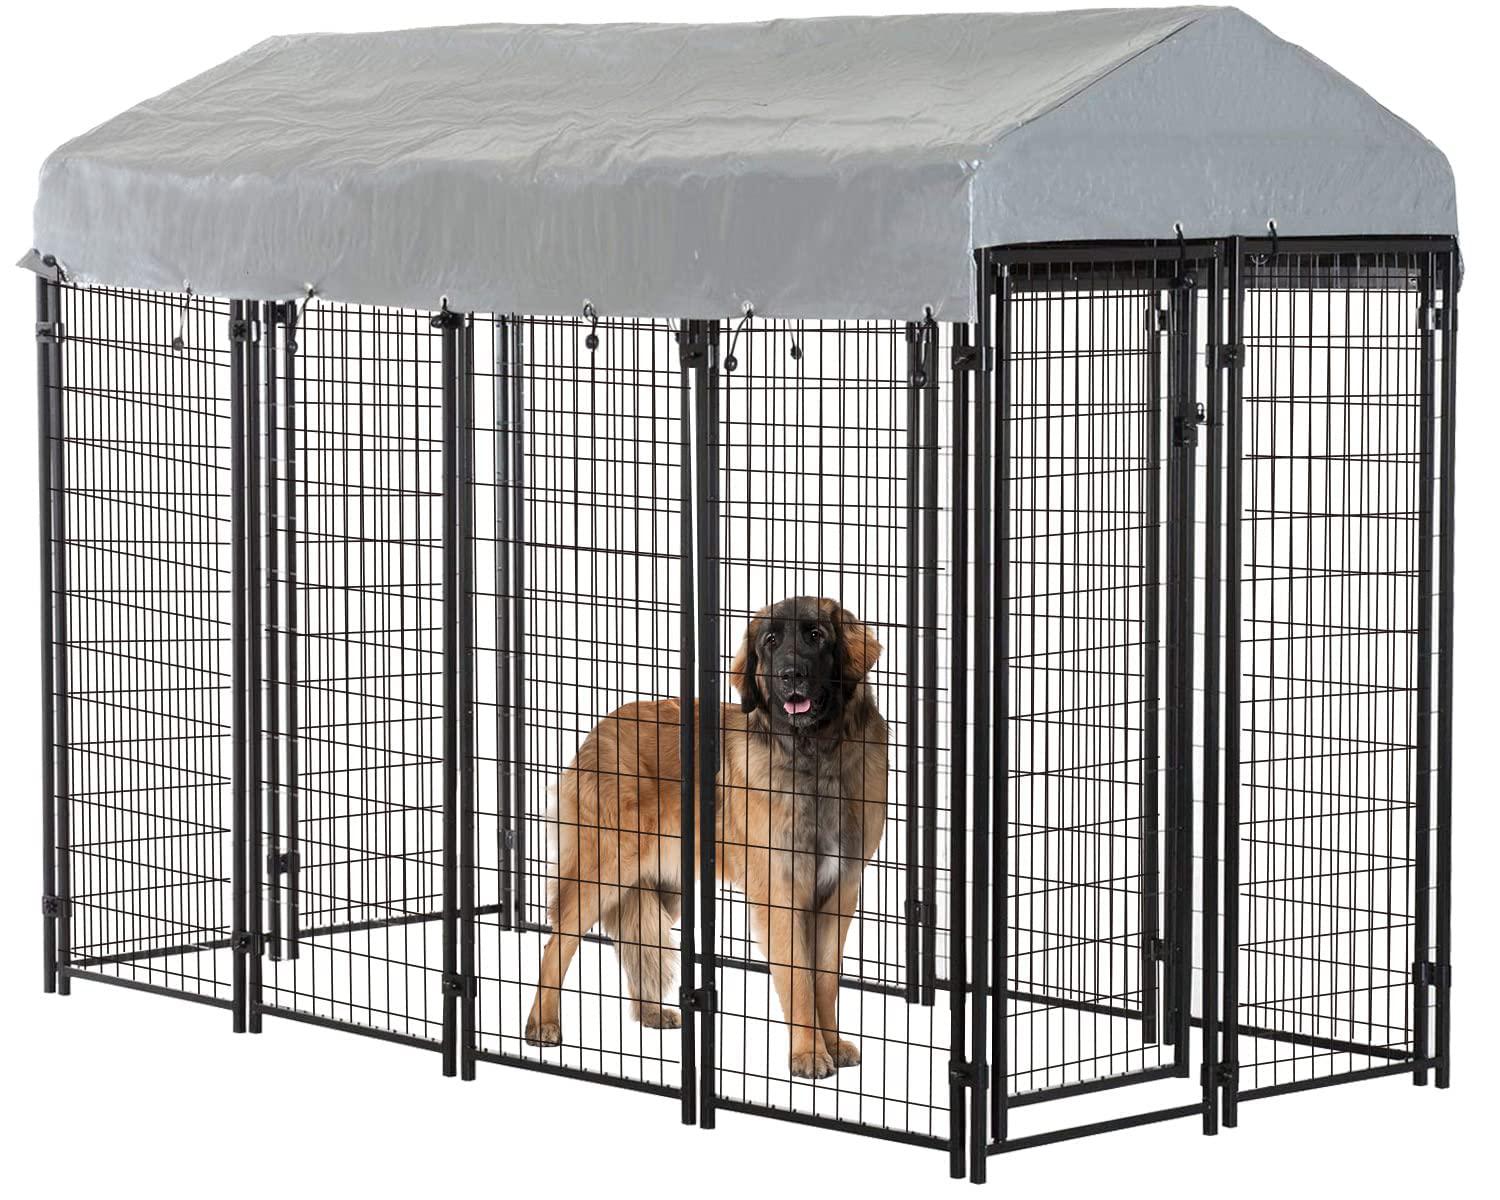 bestpet 8 x 4 x 6 ft dog kennel outdoor dog pen playpen house heavy duty dog crate metal galvanized welded pet animal camping